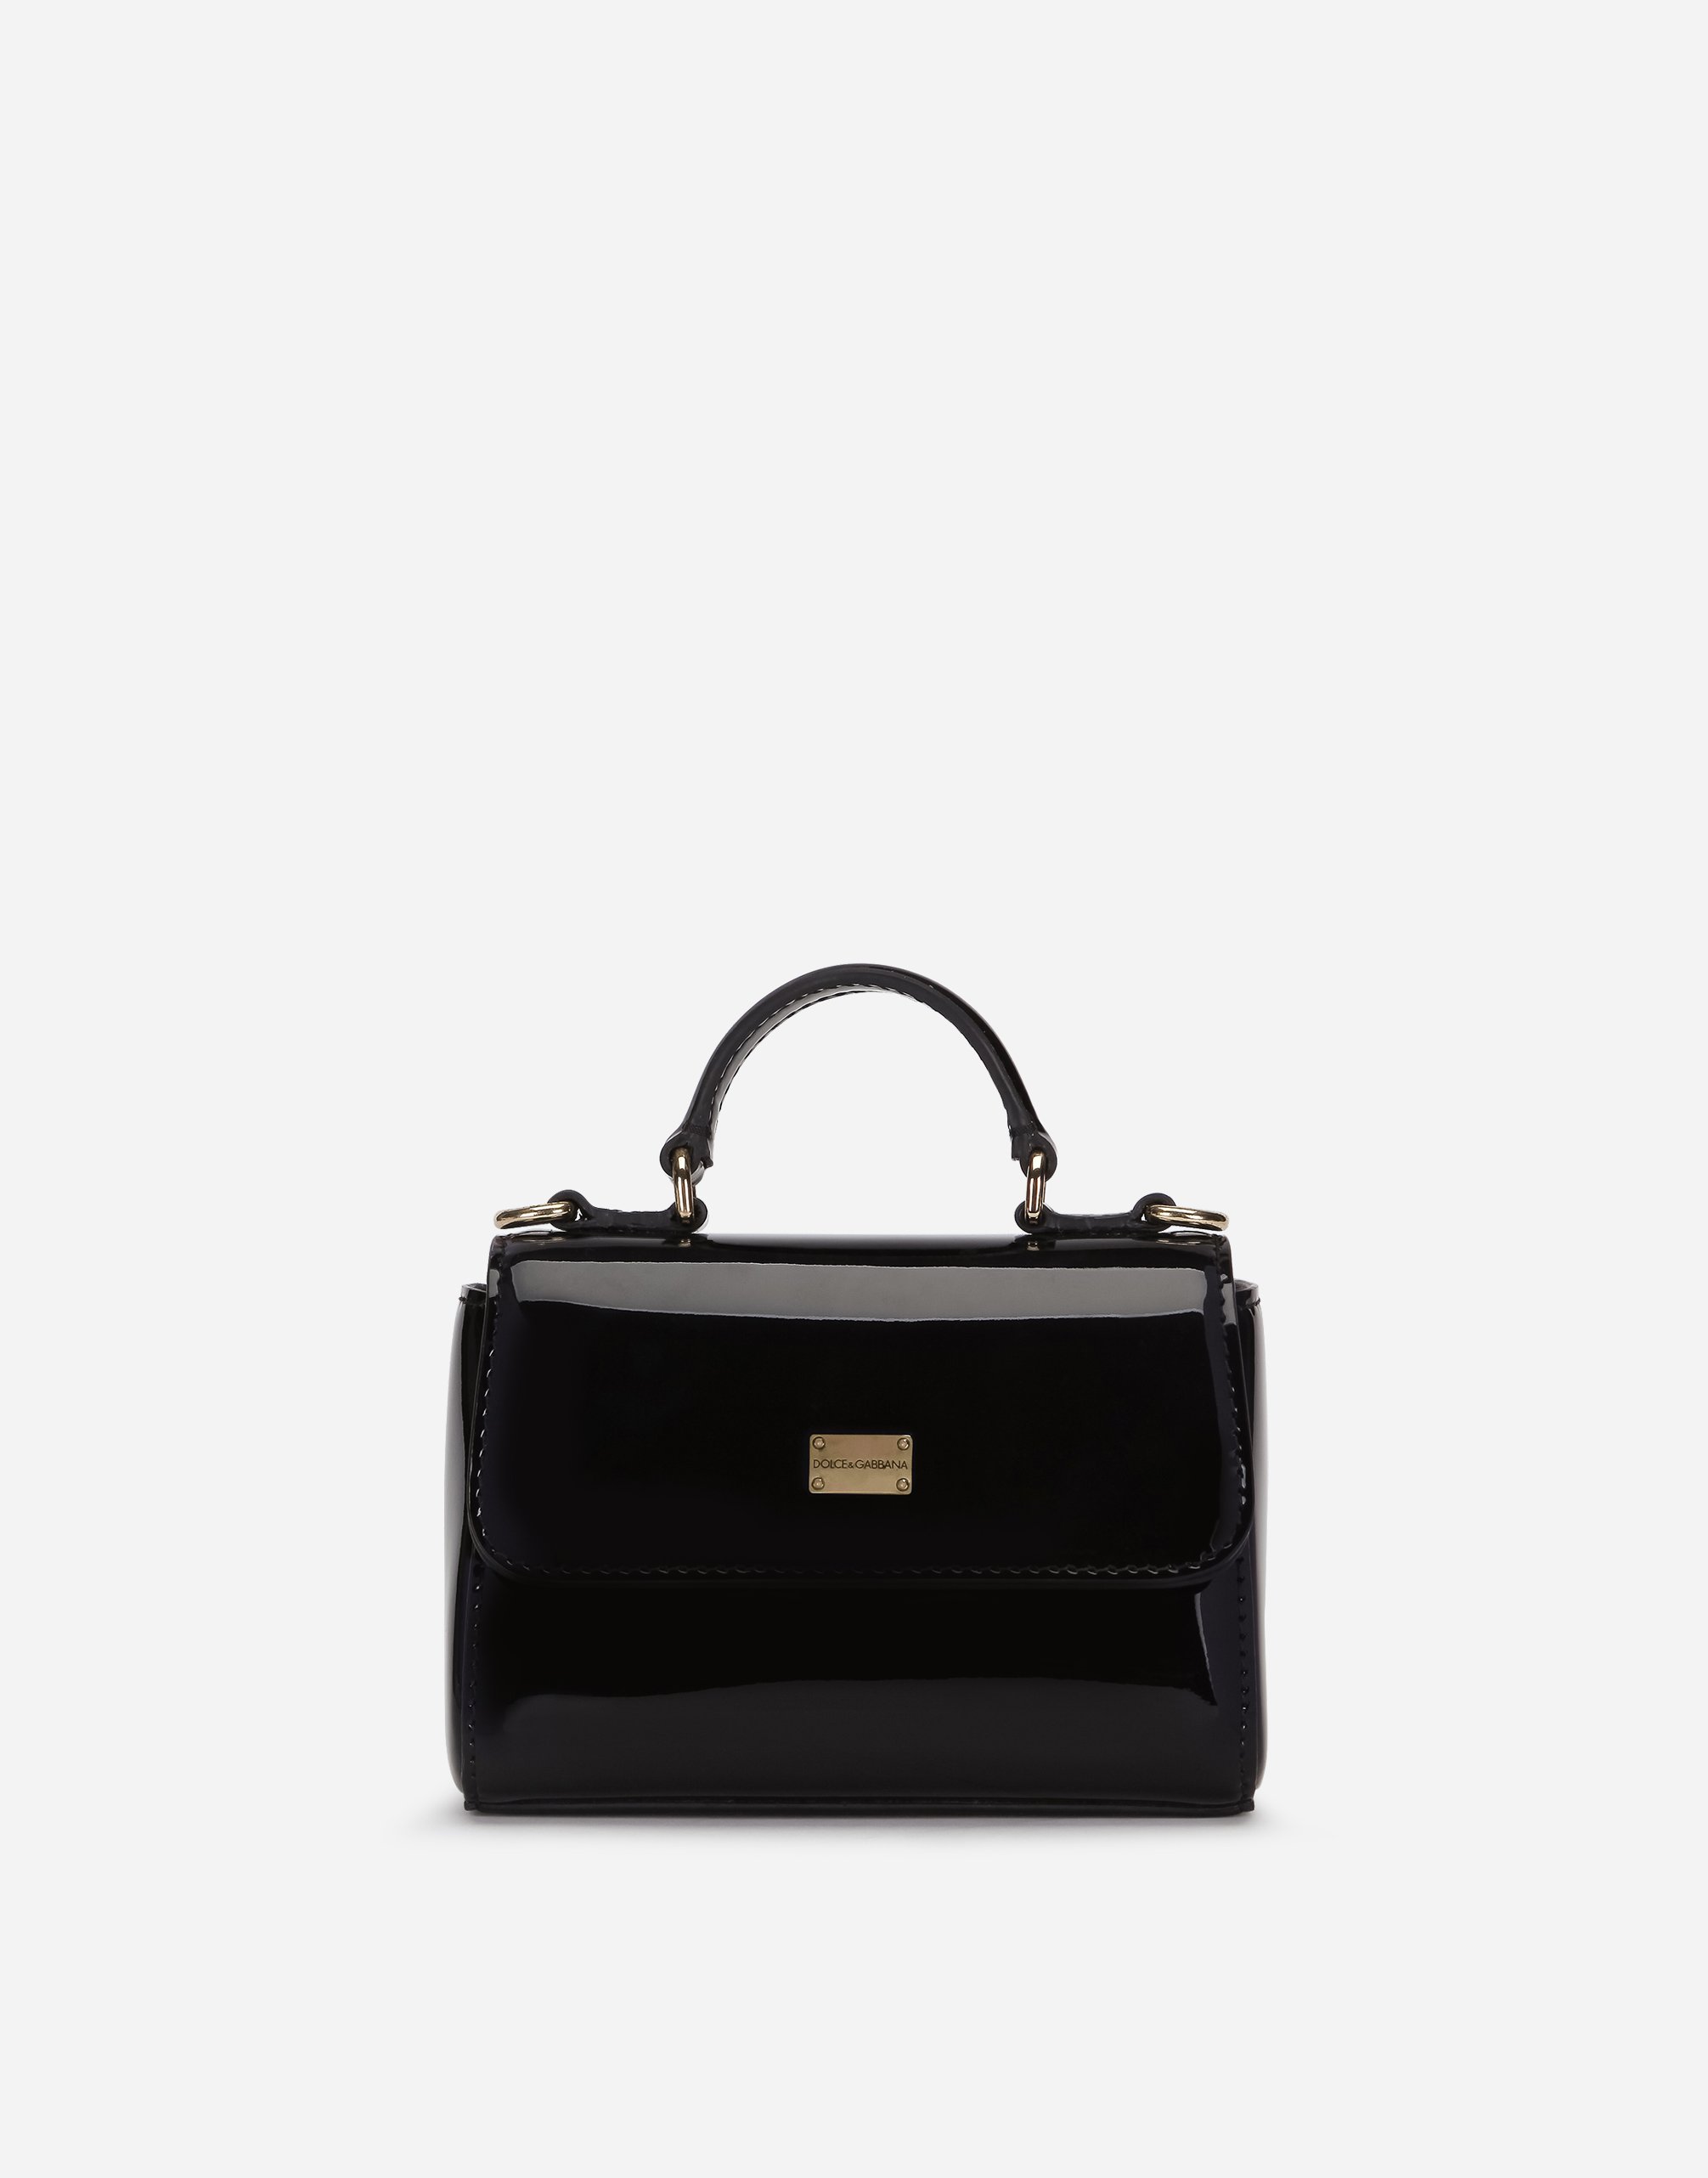 Patent leather handbag in Black